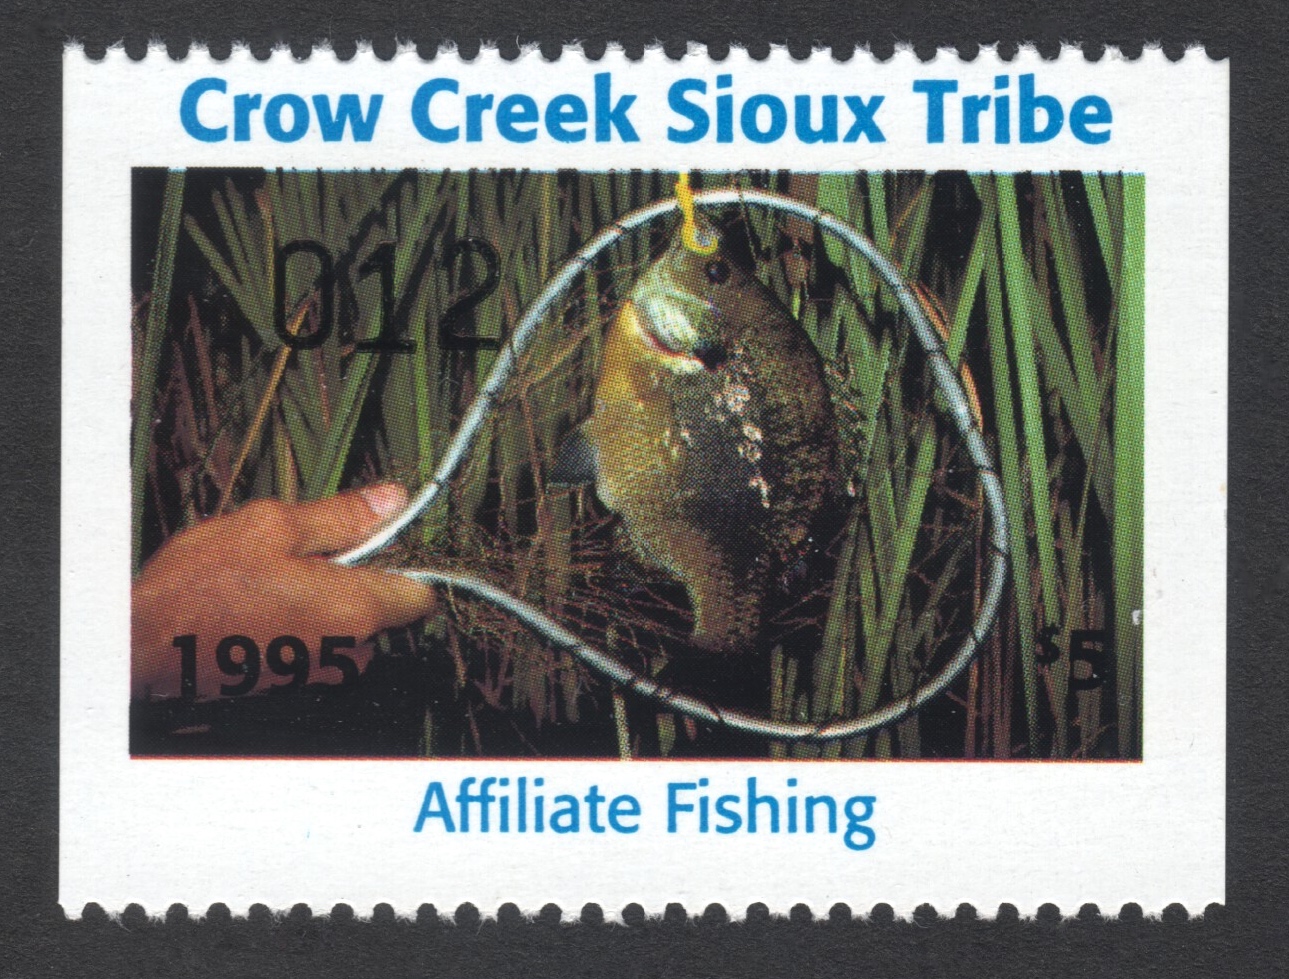 1995 Crow Creek Affiliate Fishing